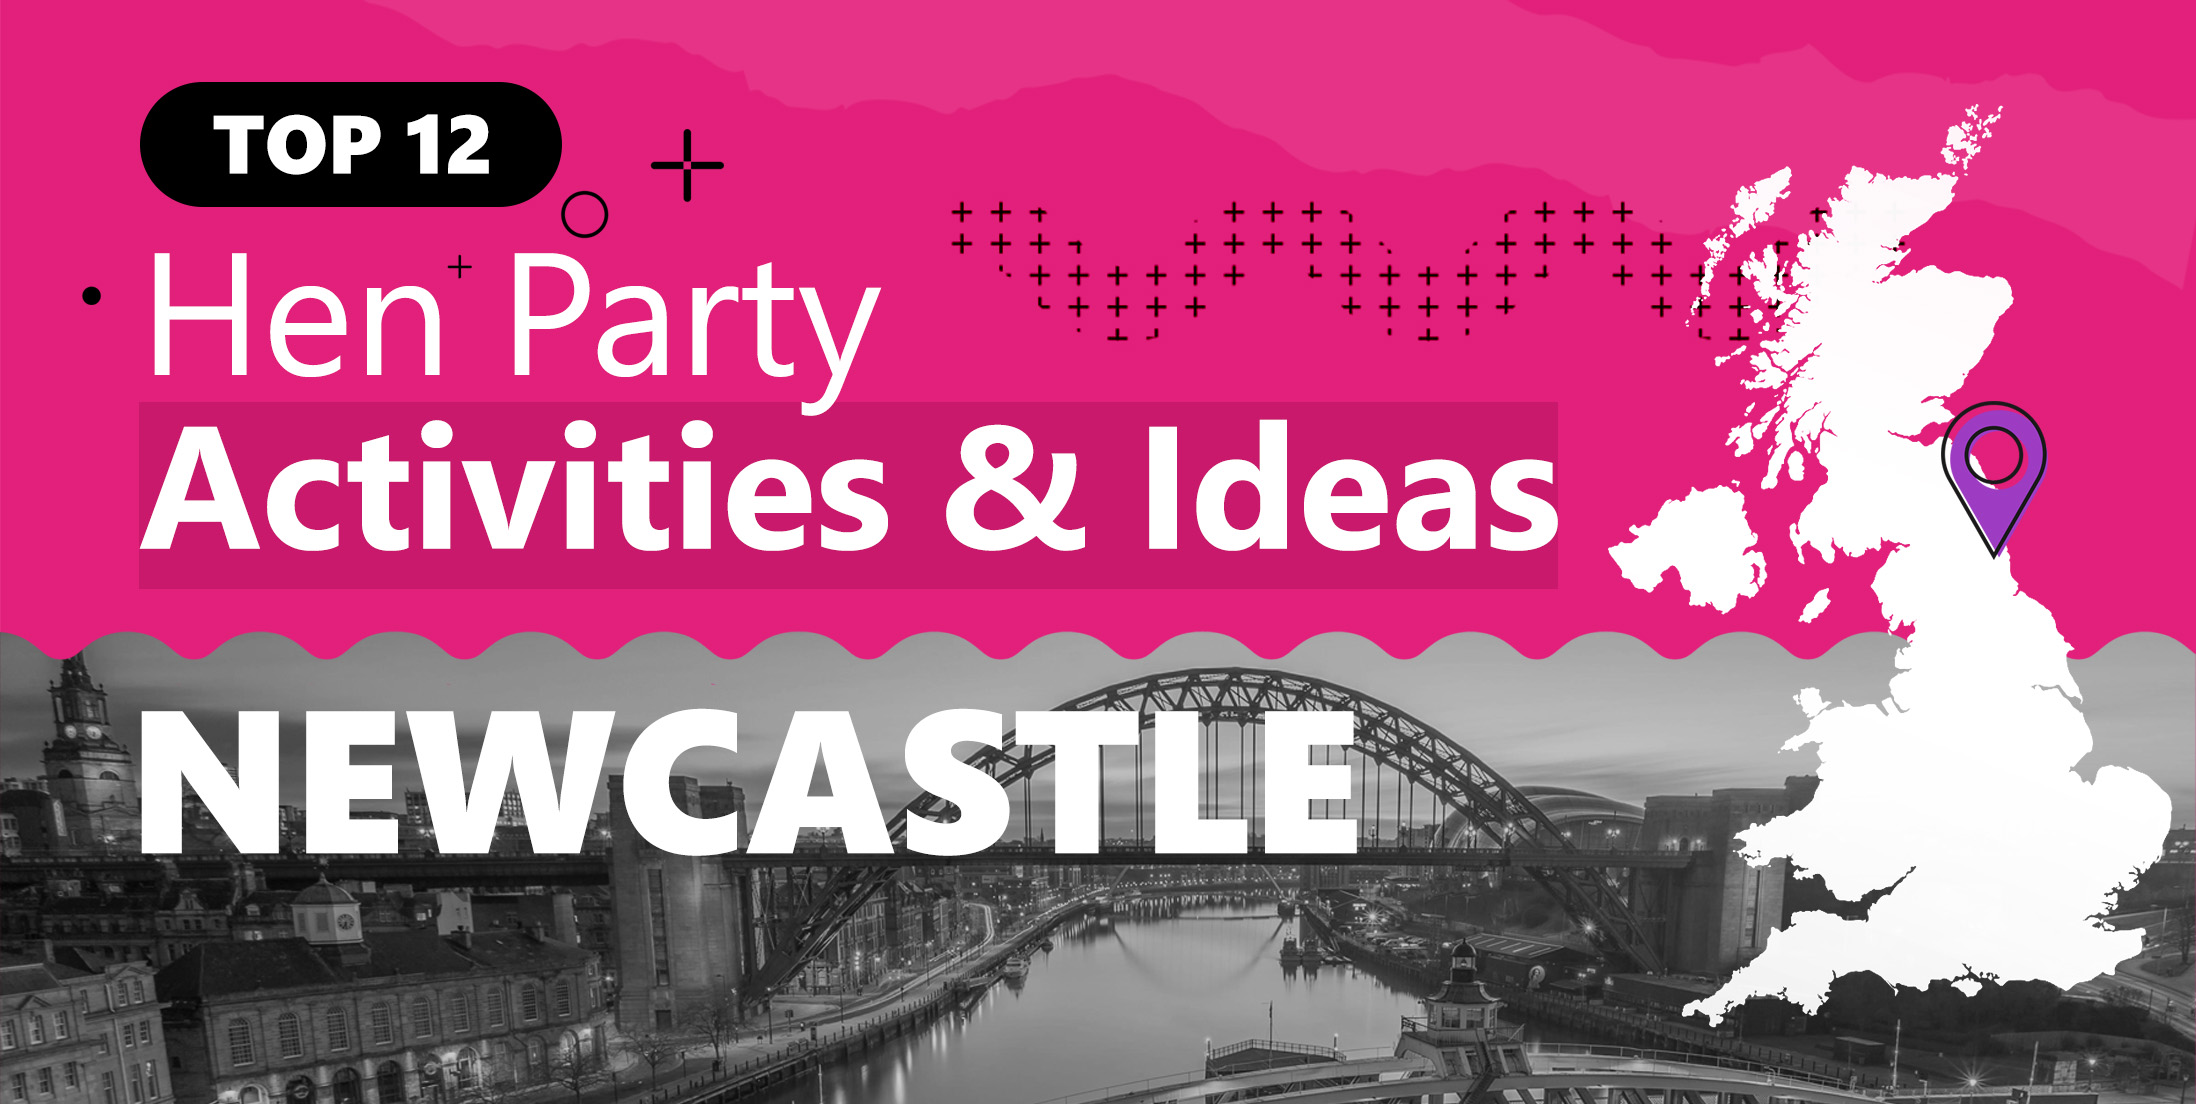 Top 12 Hen Party Activities & Ideas in Newcastle